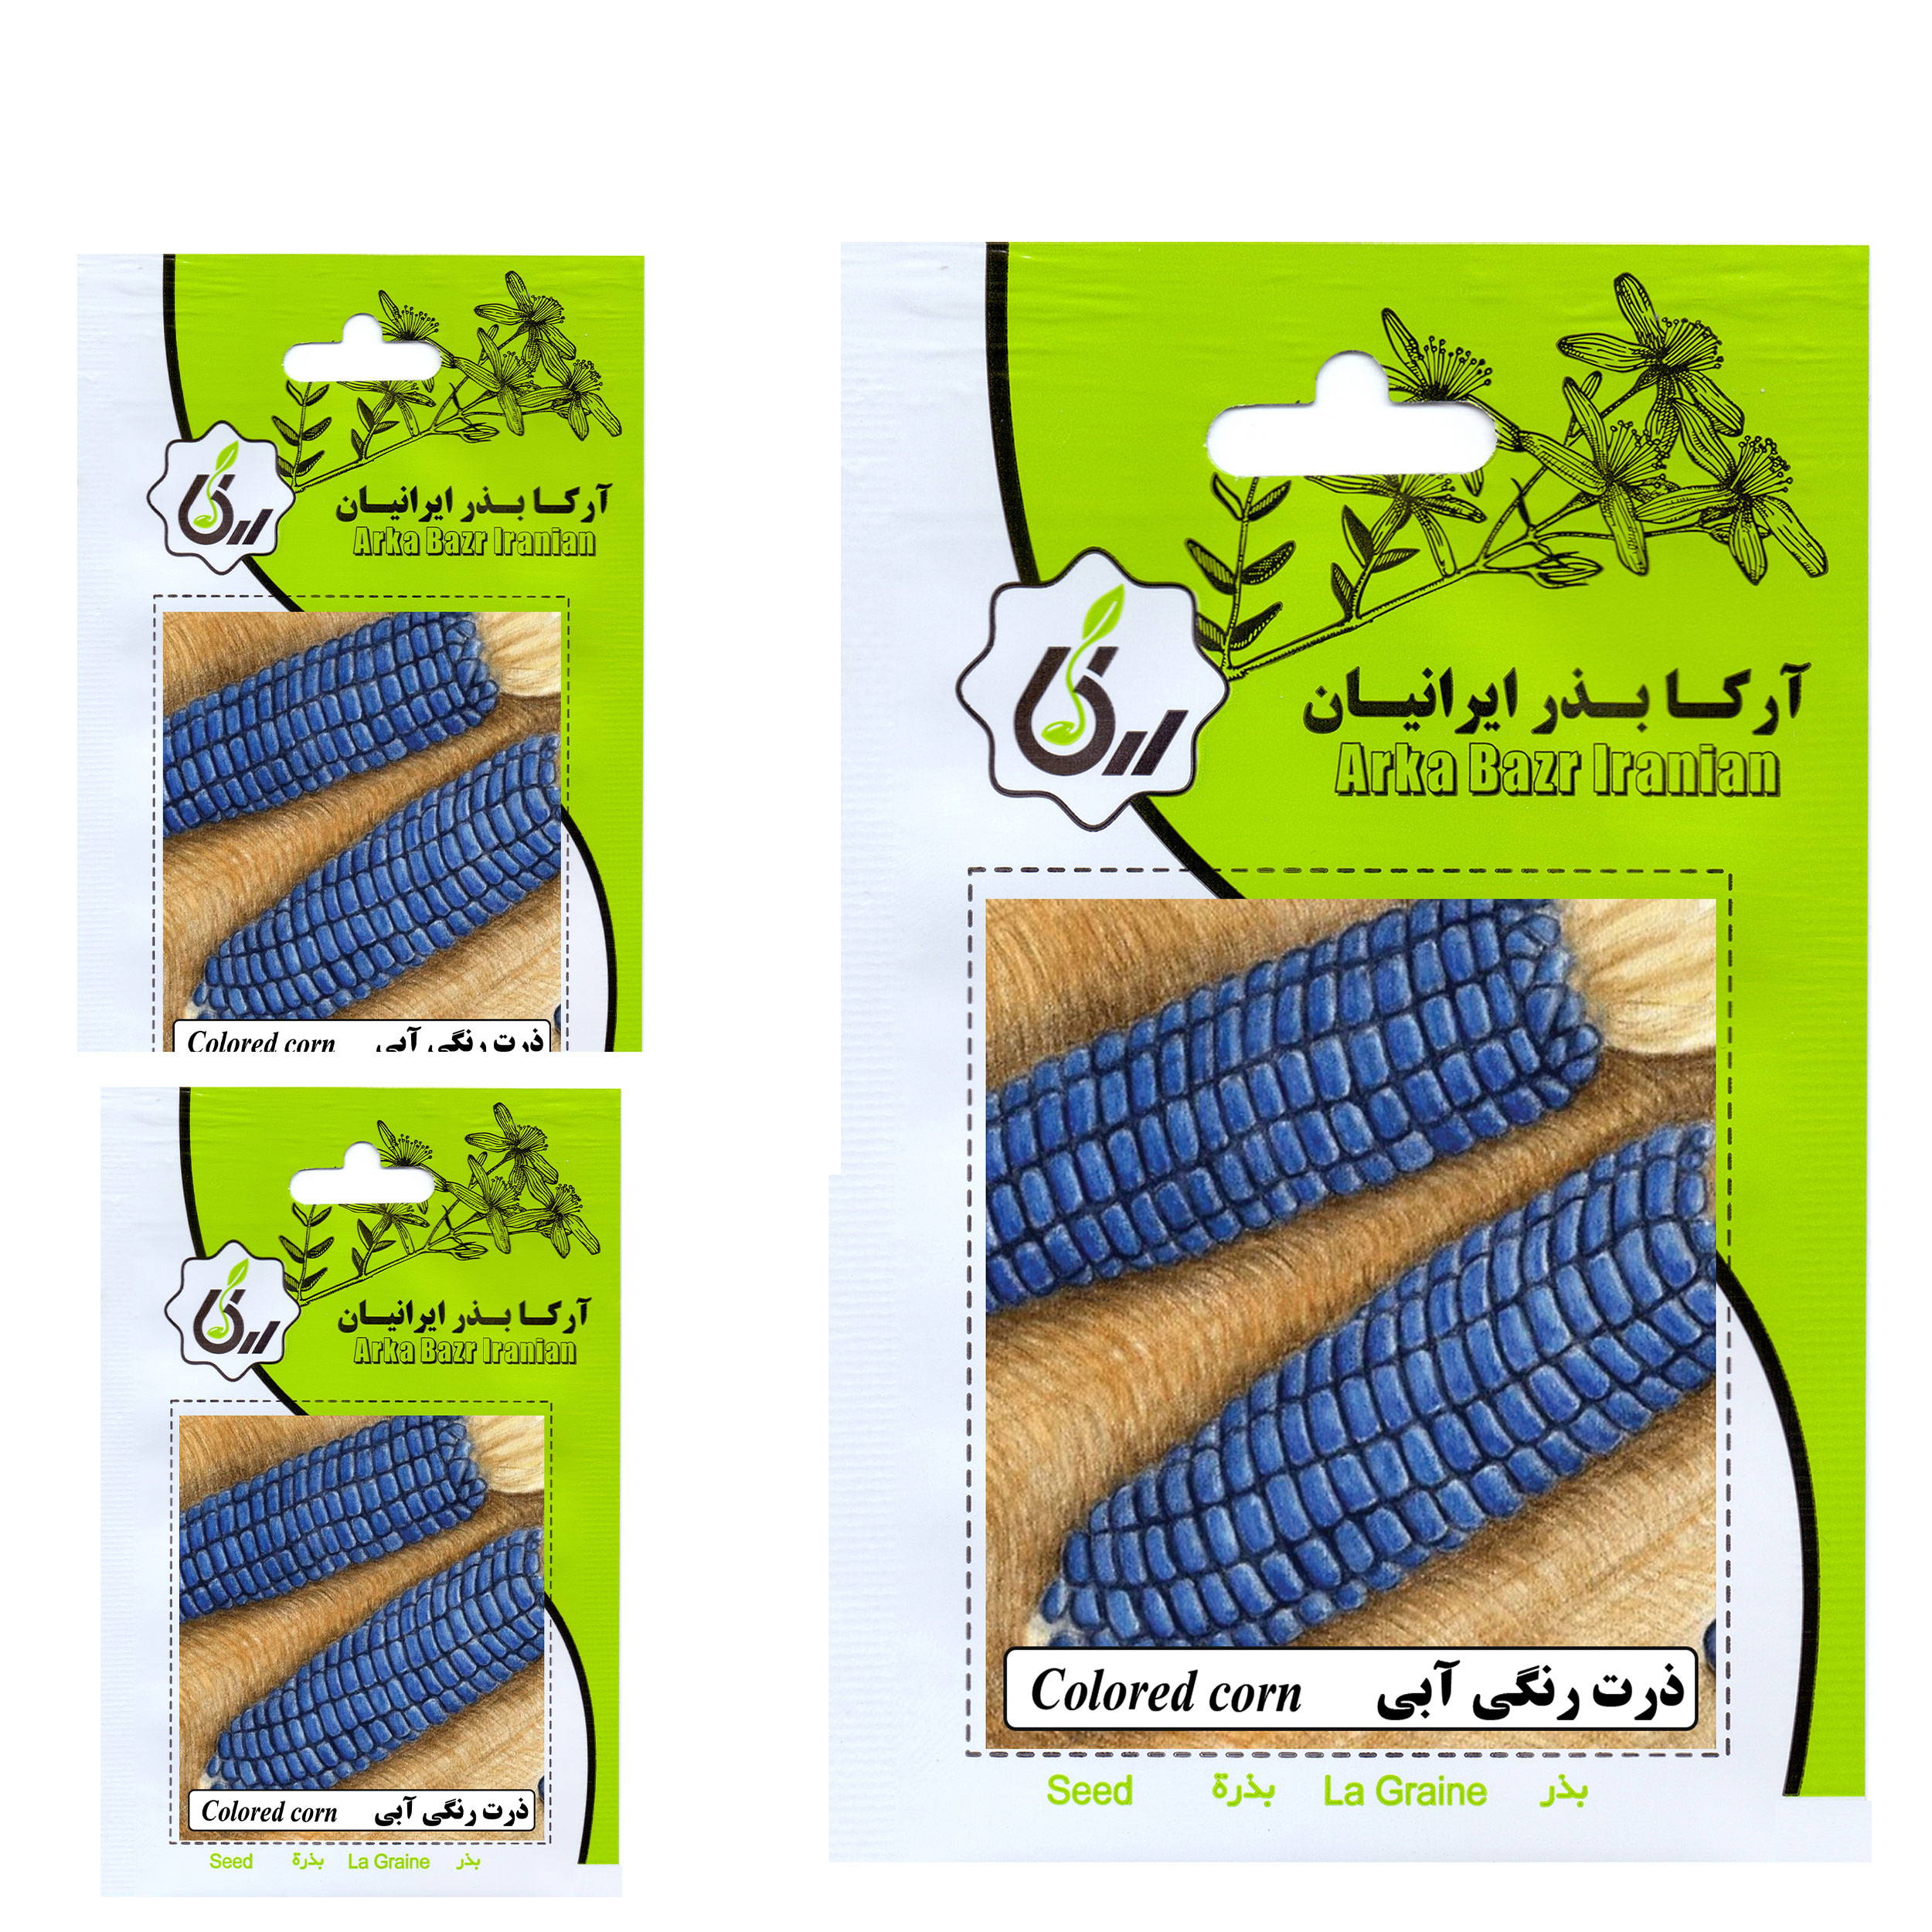 بذر ذرت رنگی آبی آرکا بذر ایرانیان کد 016 مجموعه 3 عددی